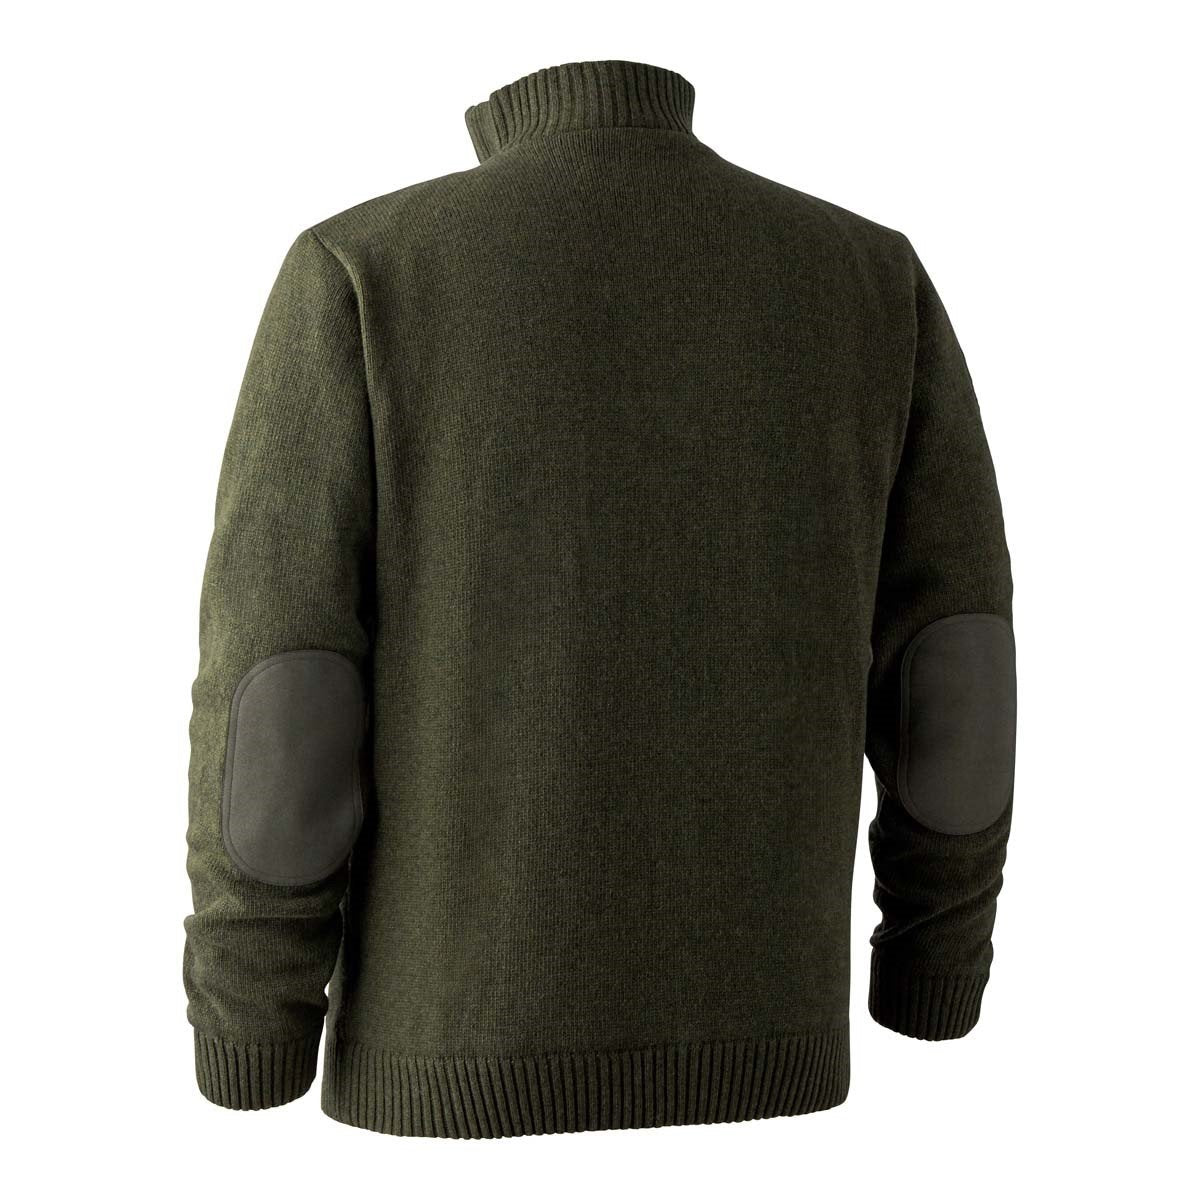 40% OFF DEERHUNTER Carlisle Knit with Storm Liner - Mens - Green Melange - Size: SMALL